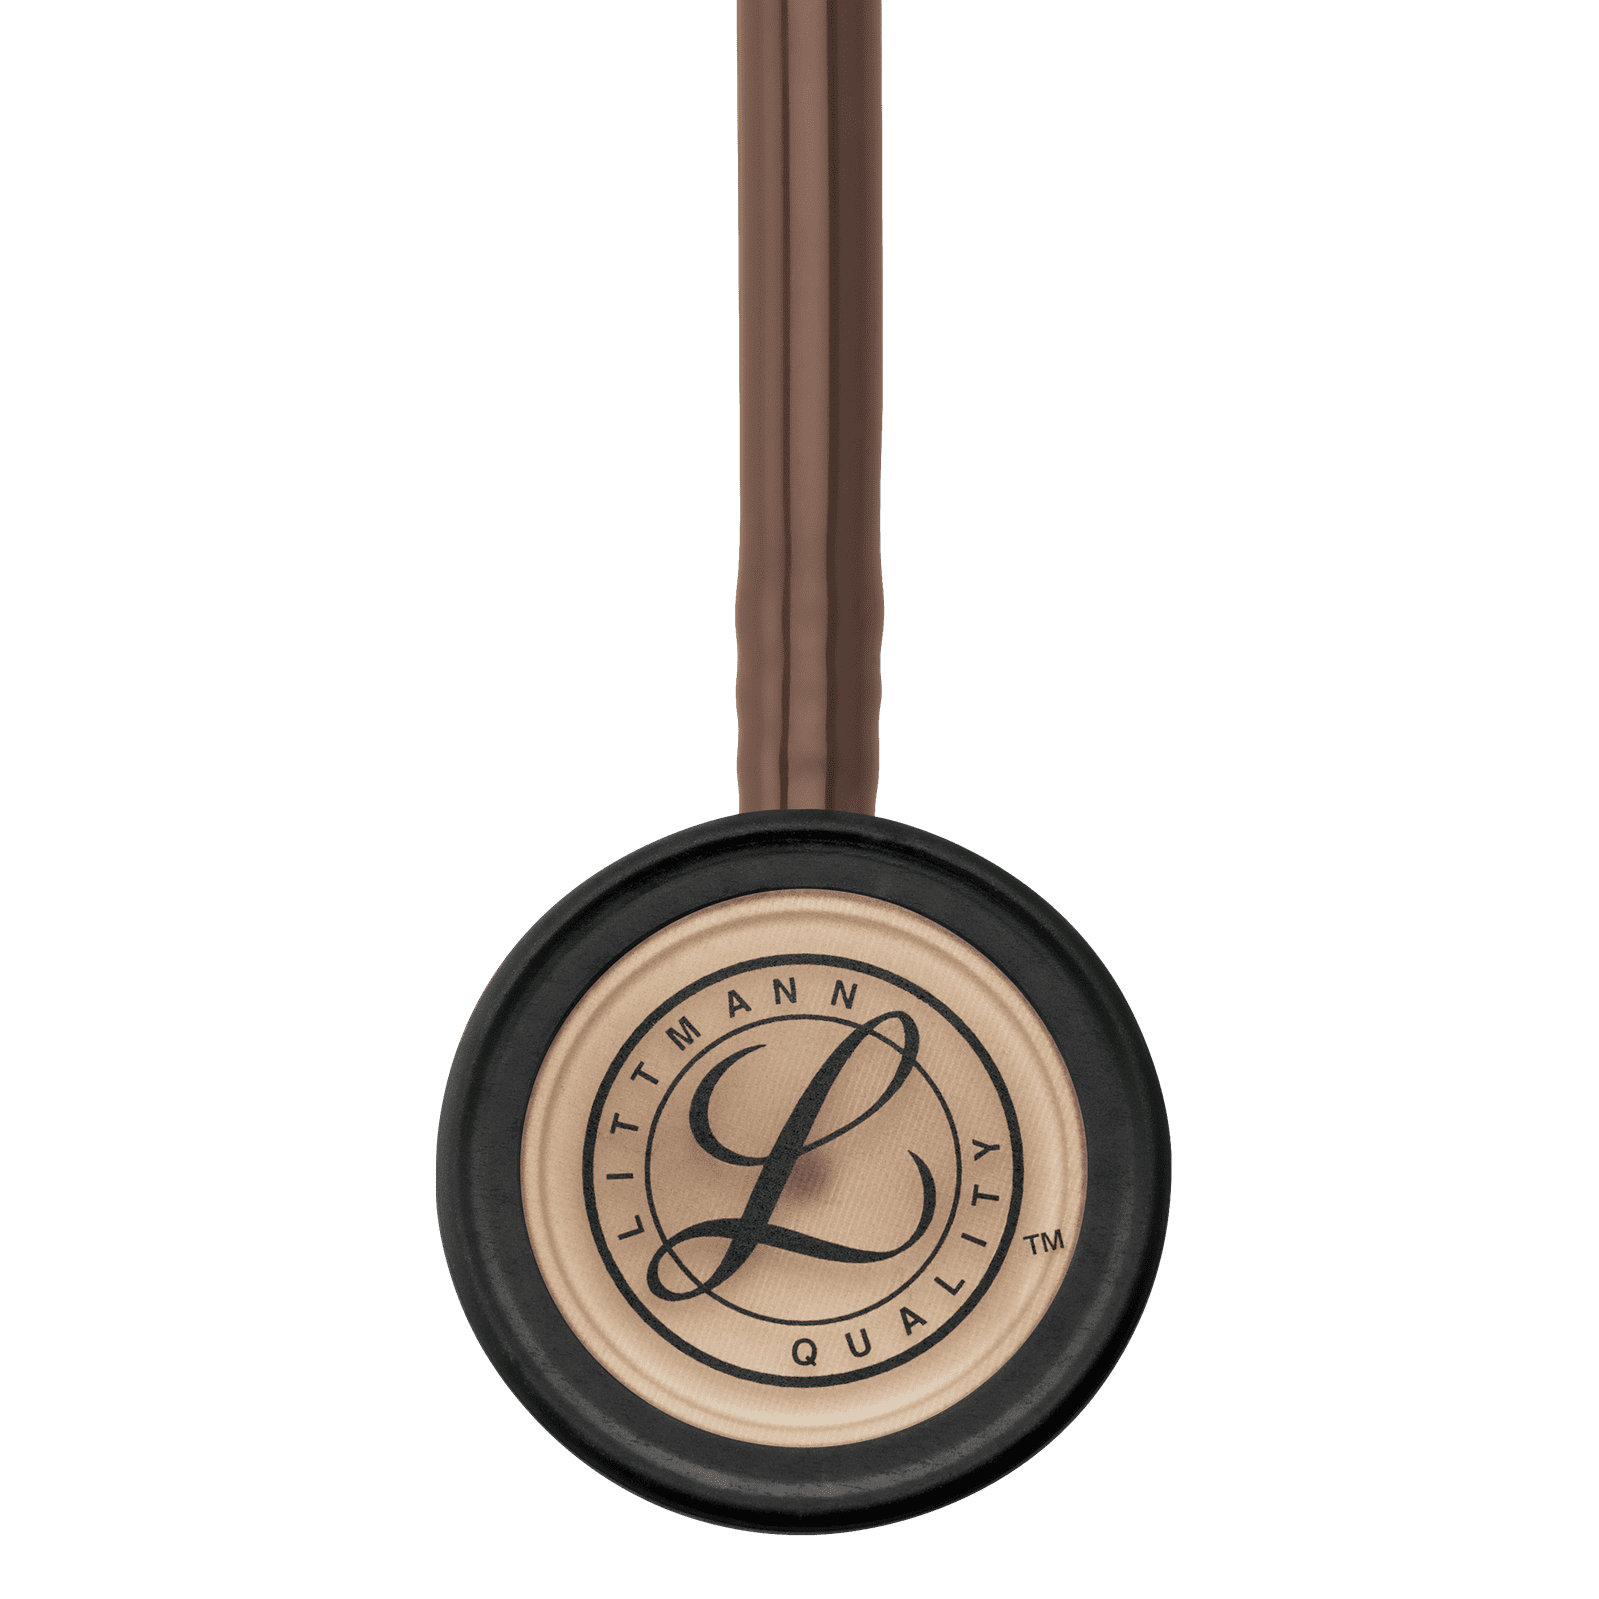 Littmann Classic III Monitoring Stethoscope: Chocolate & Copper 5809 Stethoscopes 3M Littmann   